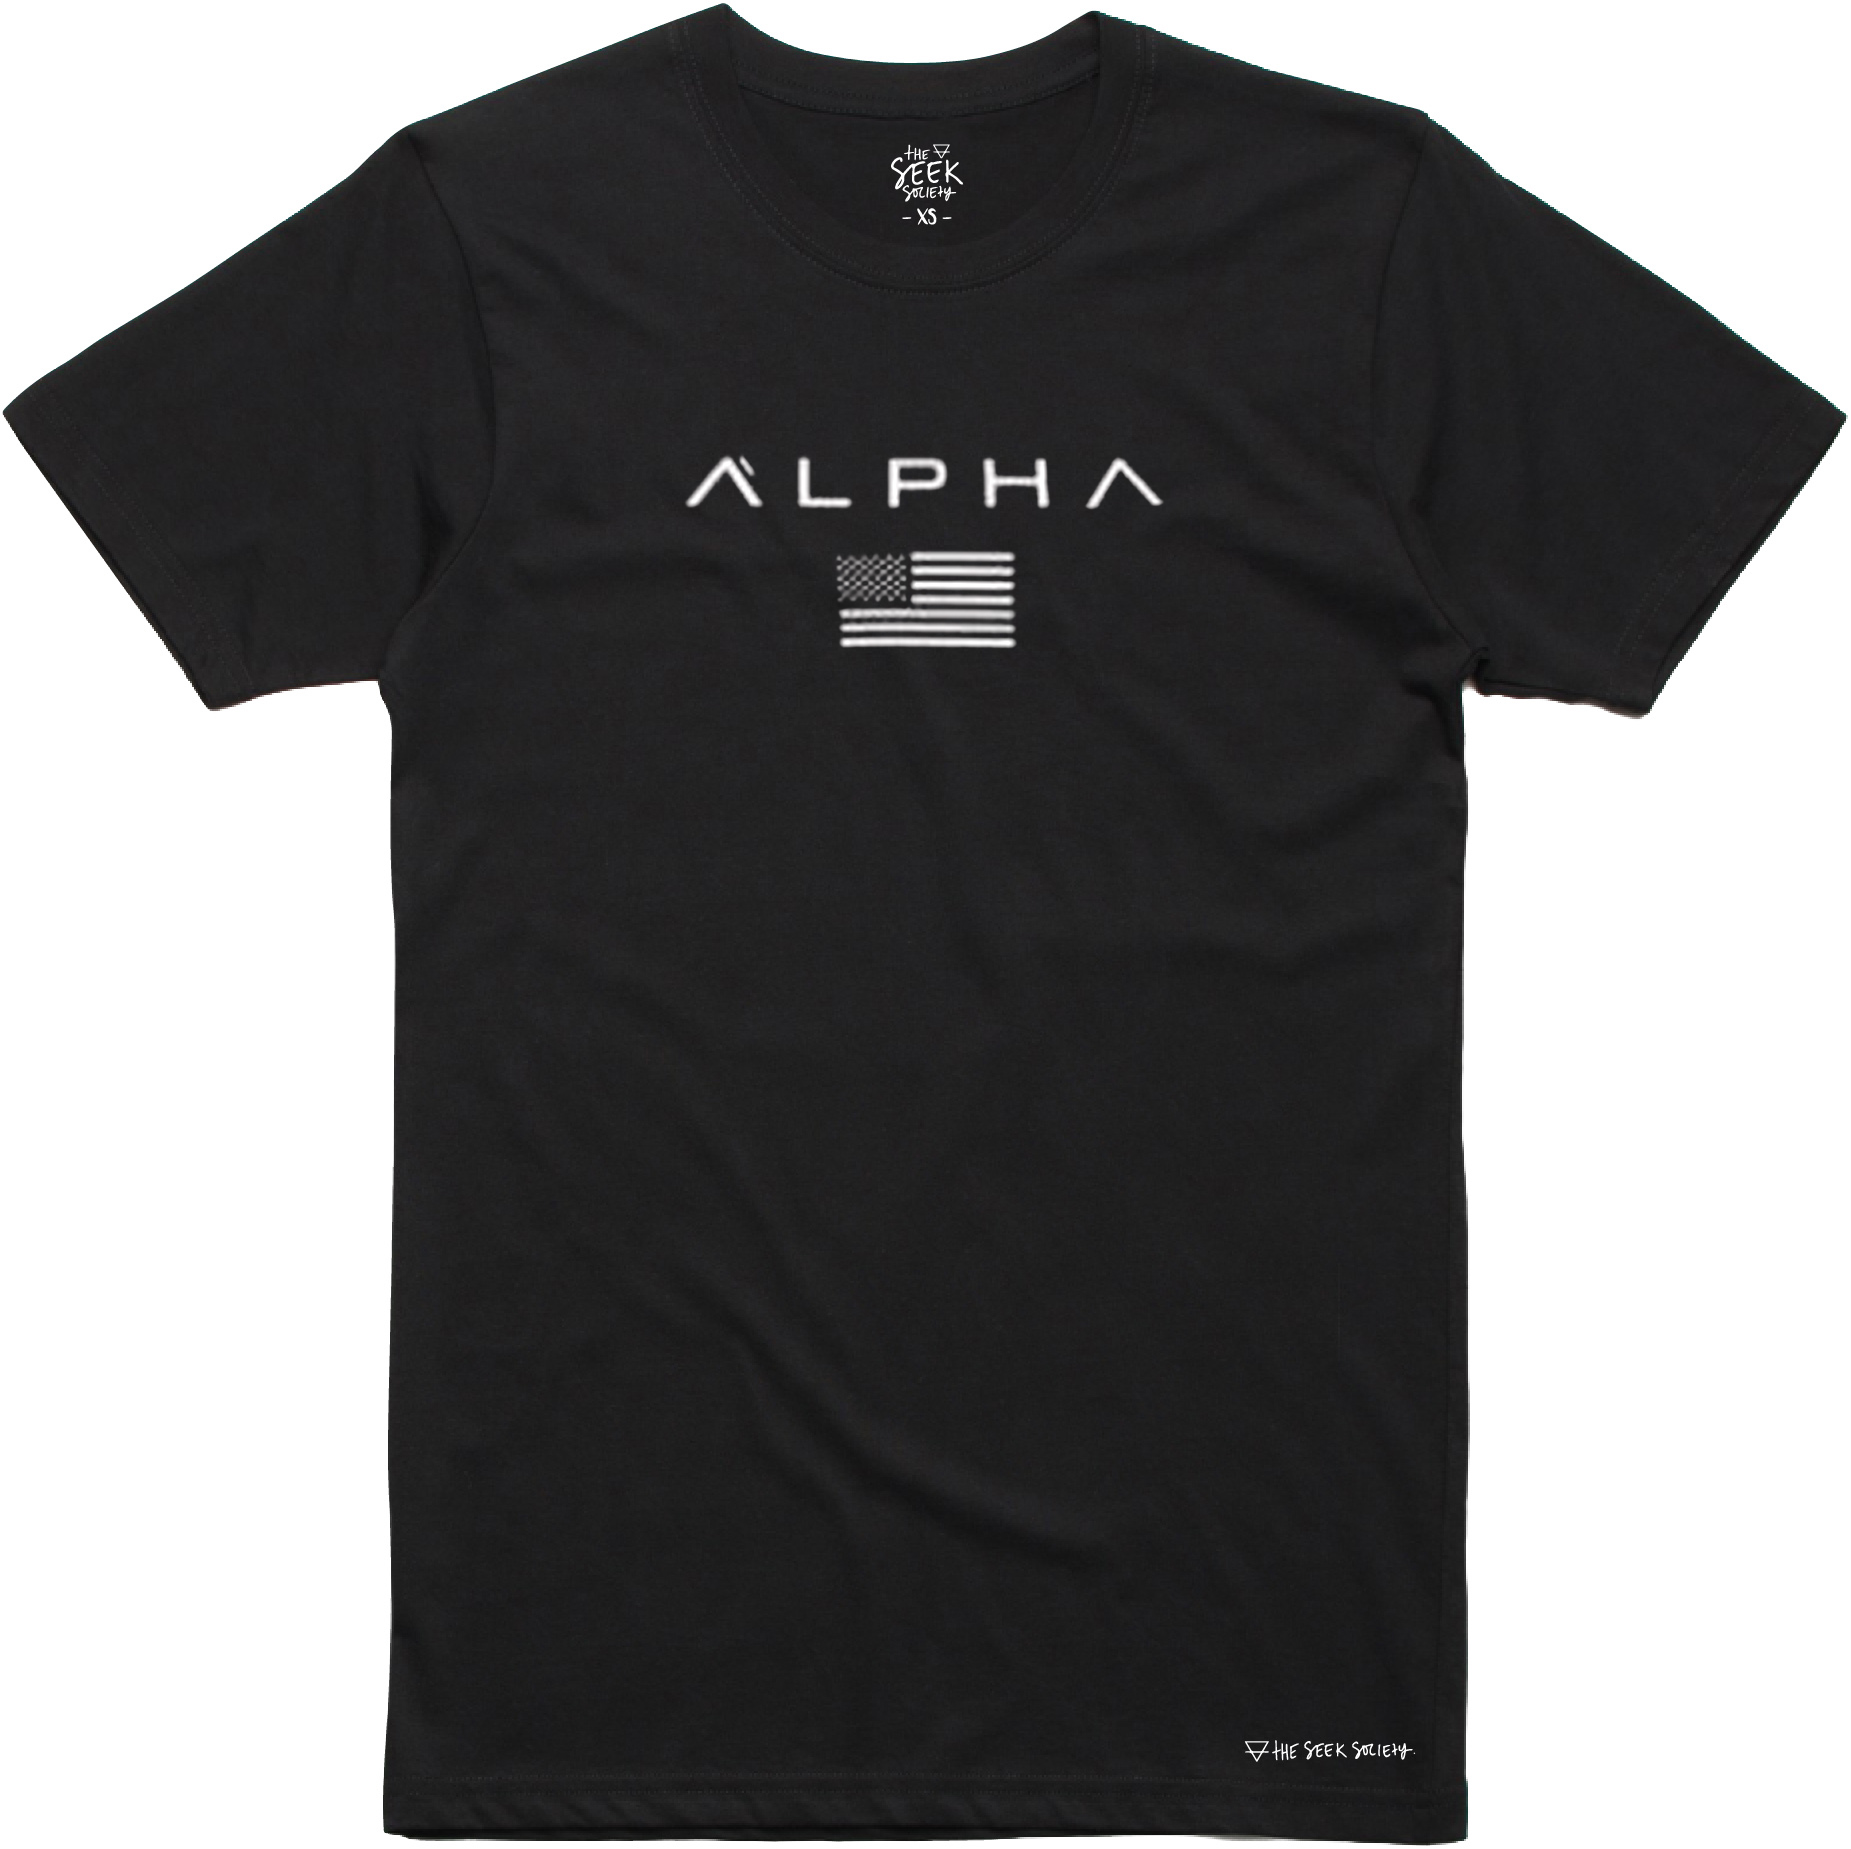 Alpha america men's black t-shirt